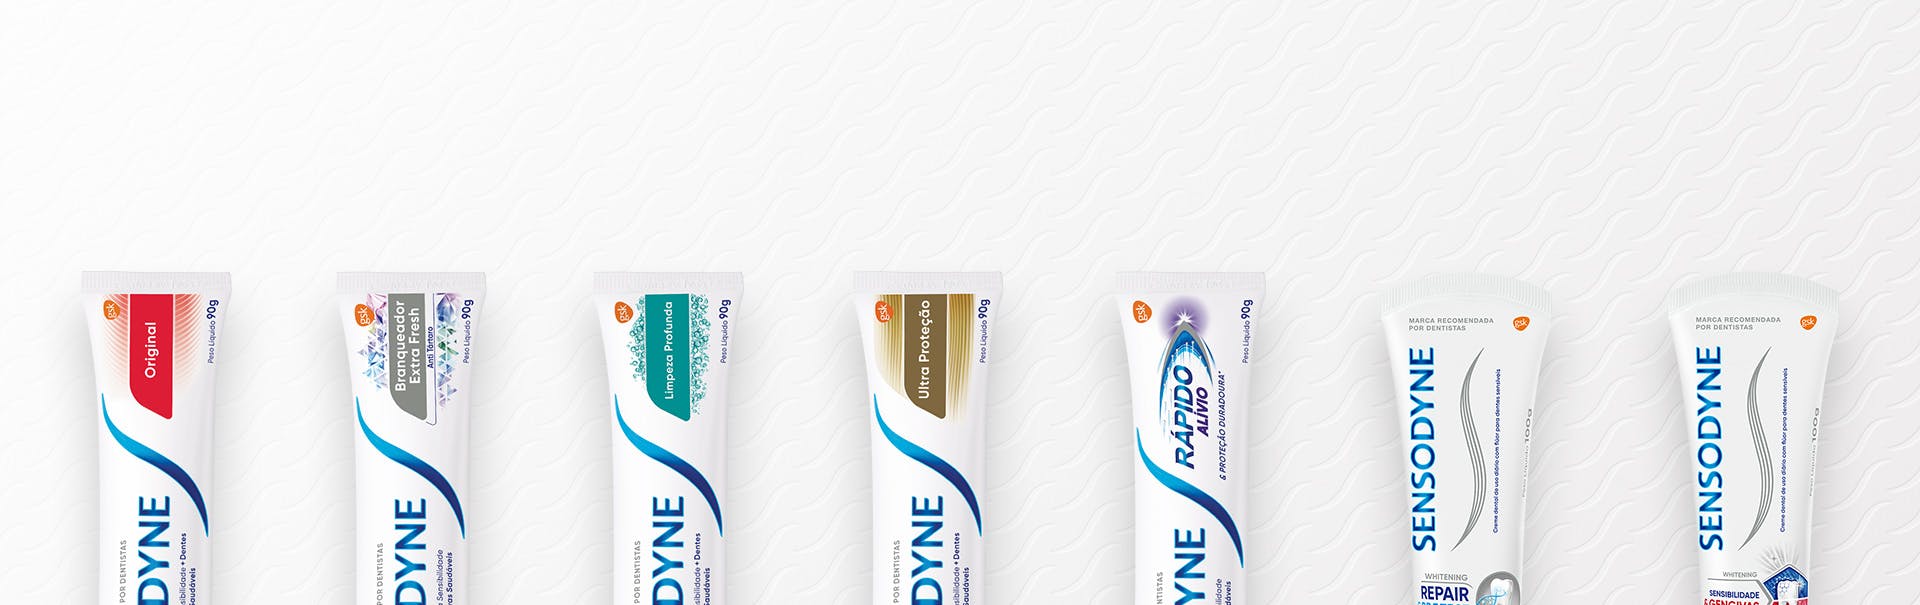 How Sensodyne Toothpaste can help with sensitive teeth symptoms